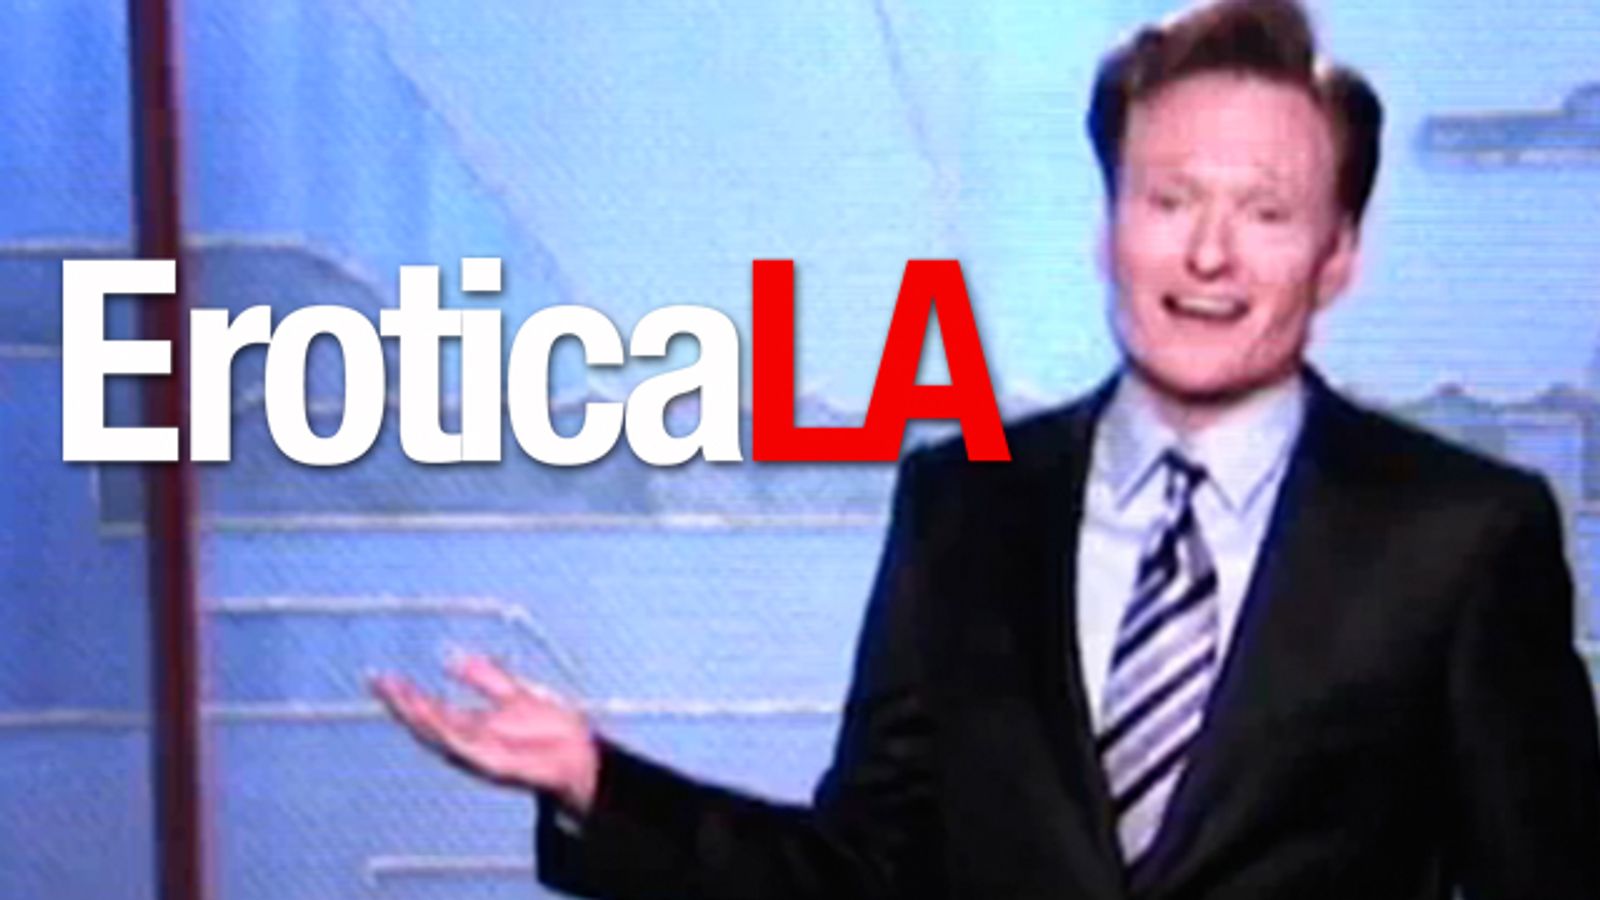 'Tonight Show' Host Conan O'Brien Ribs Erotica LA